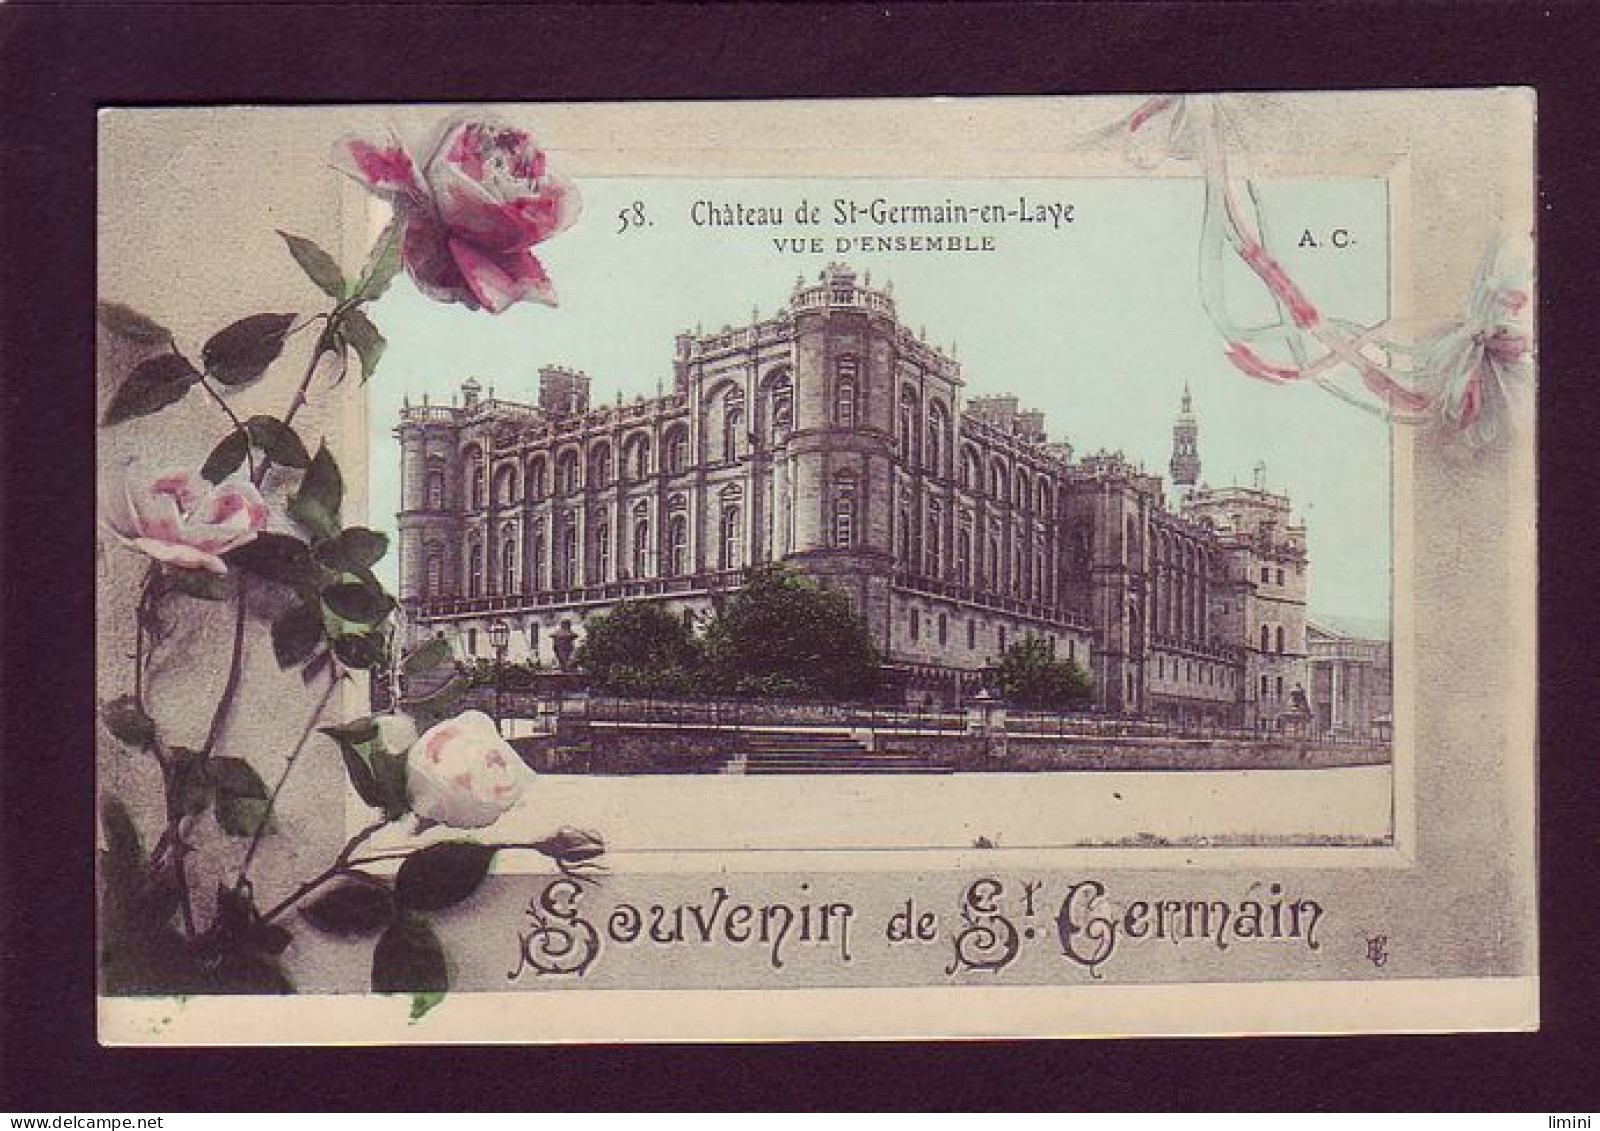 78 - SAINT-GERMAIN-en-LAYE - FLEURS - CARTE ILLUSTRÉE - SOUVENIR -  - St. Germain En Laye (Castello)